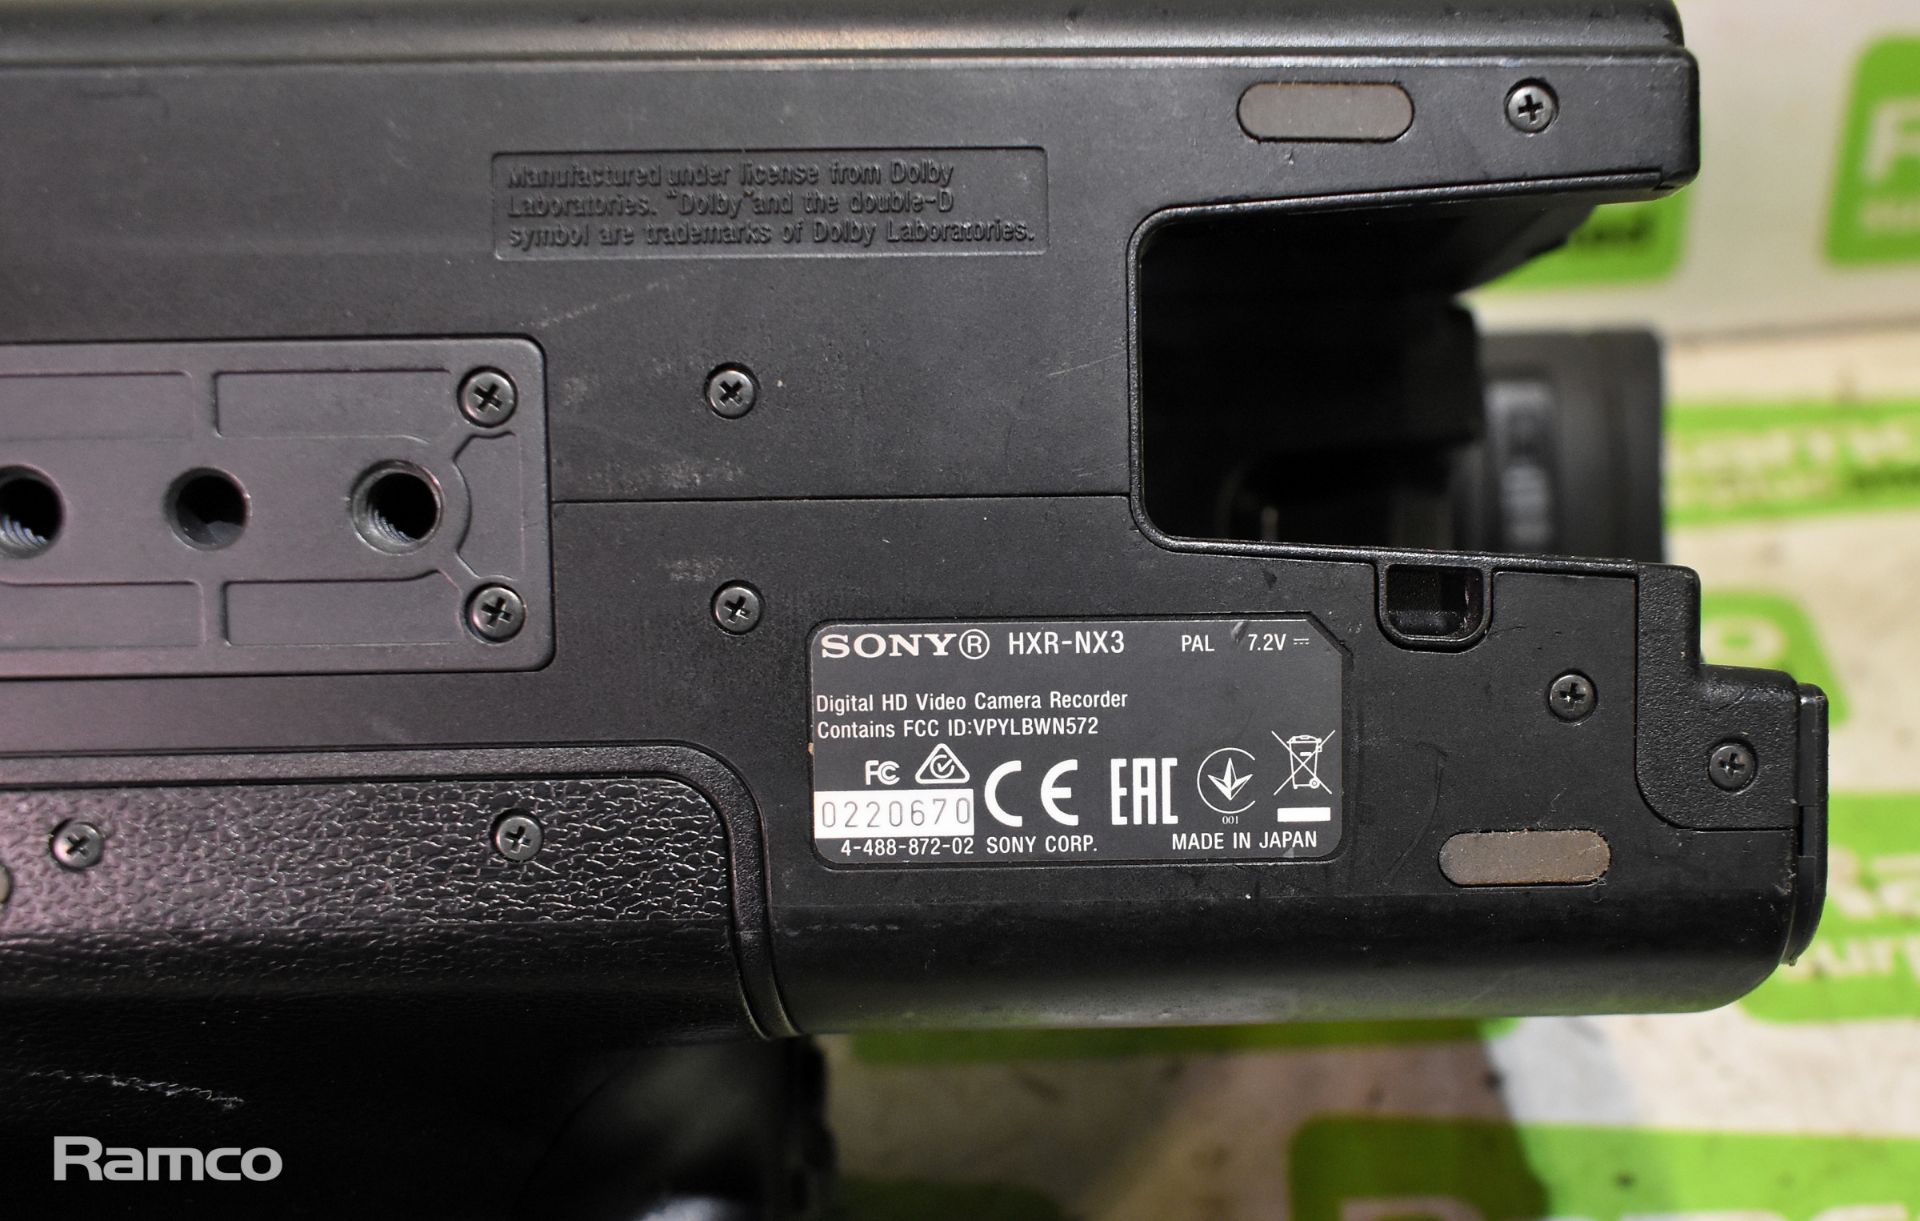 Sony HXR-NX3 digital HD video camera recorder - Image 9 of 9